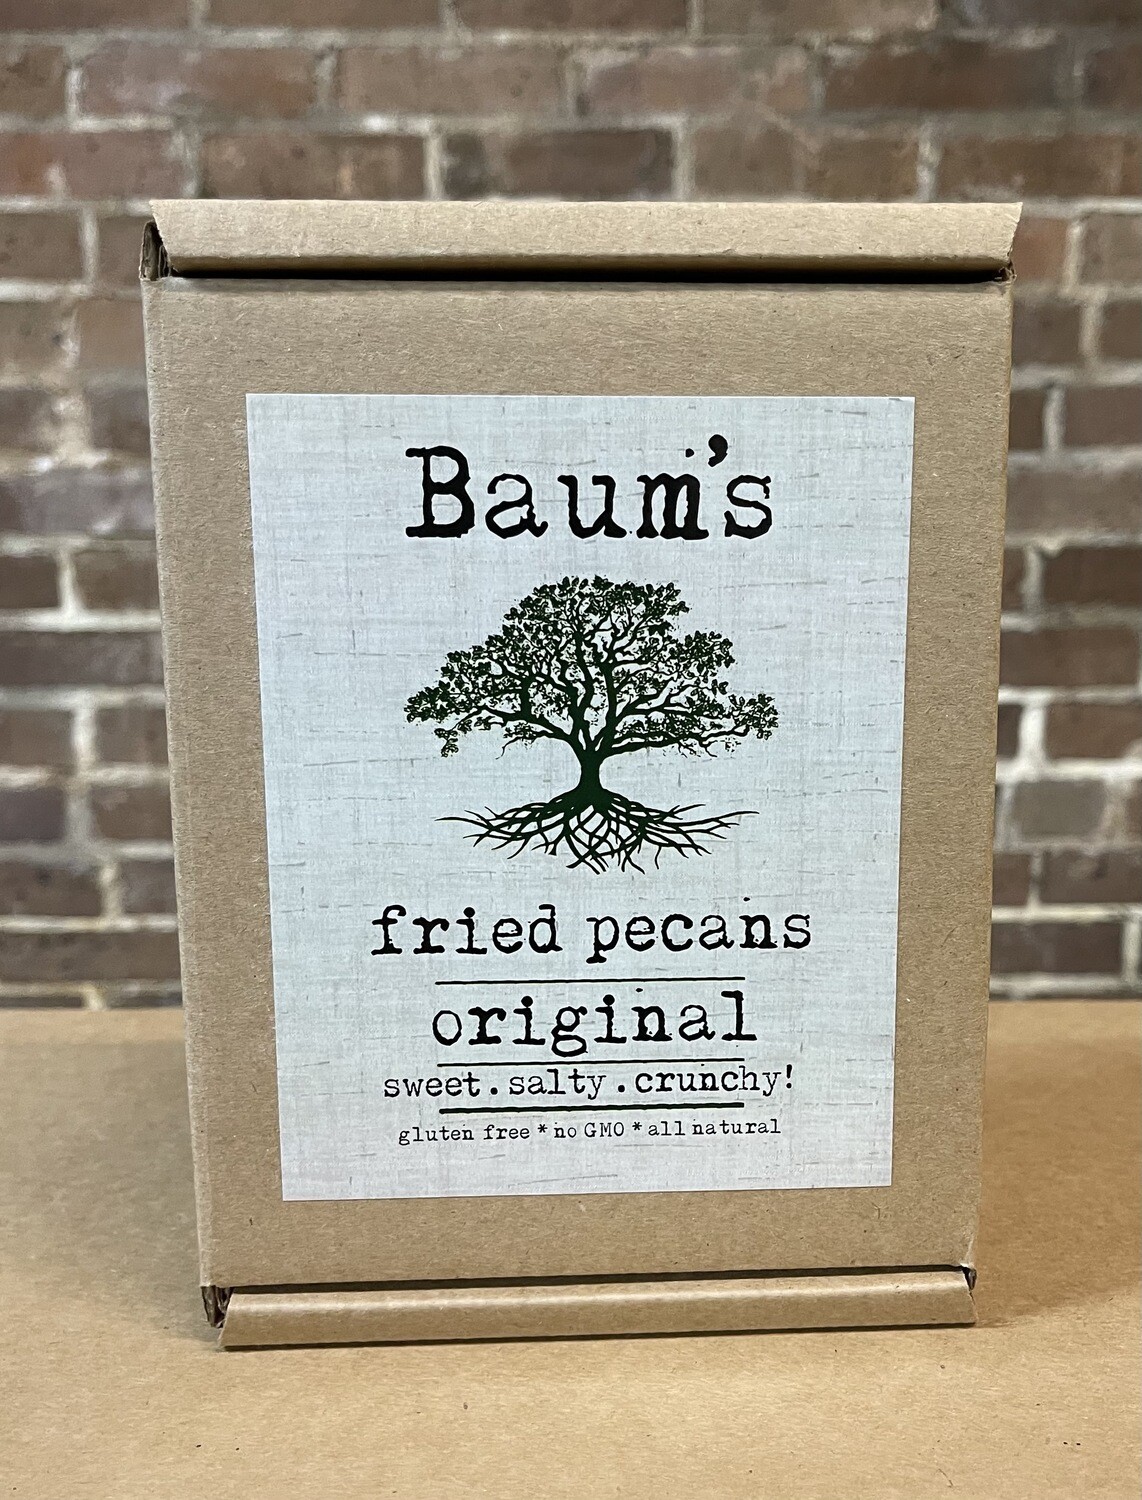 Baum's Fried Pecans "Original" Gift Box